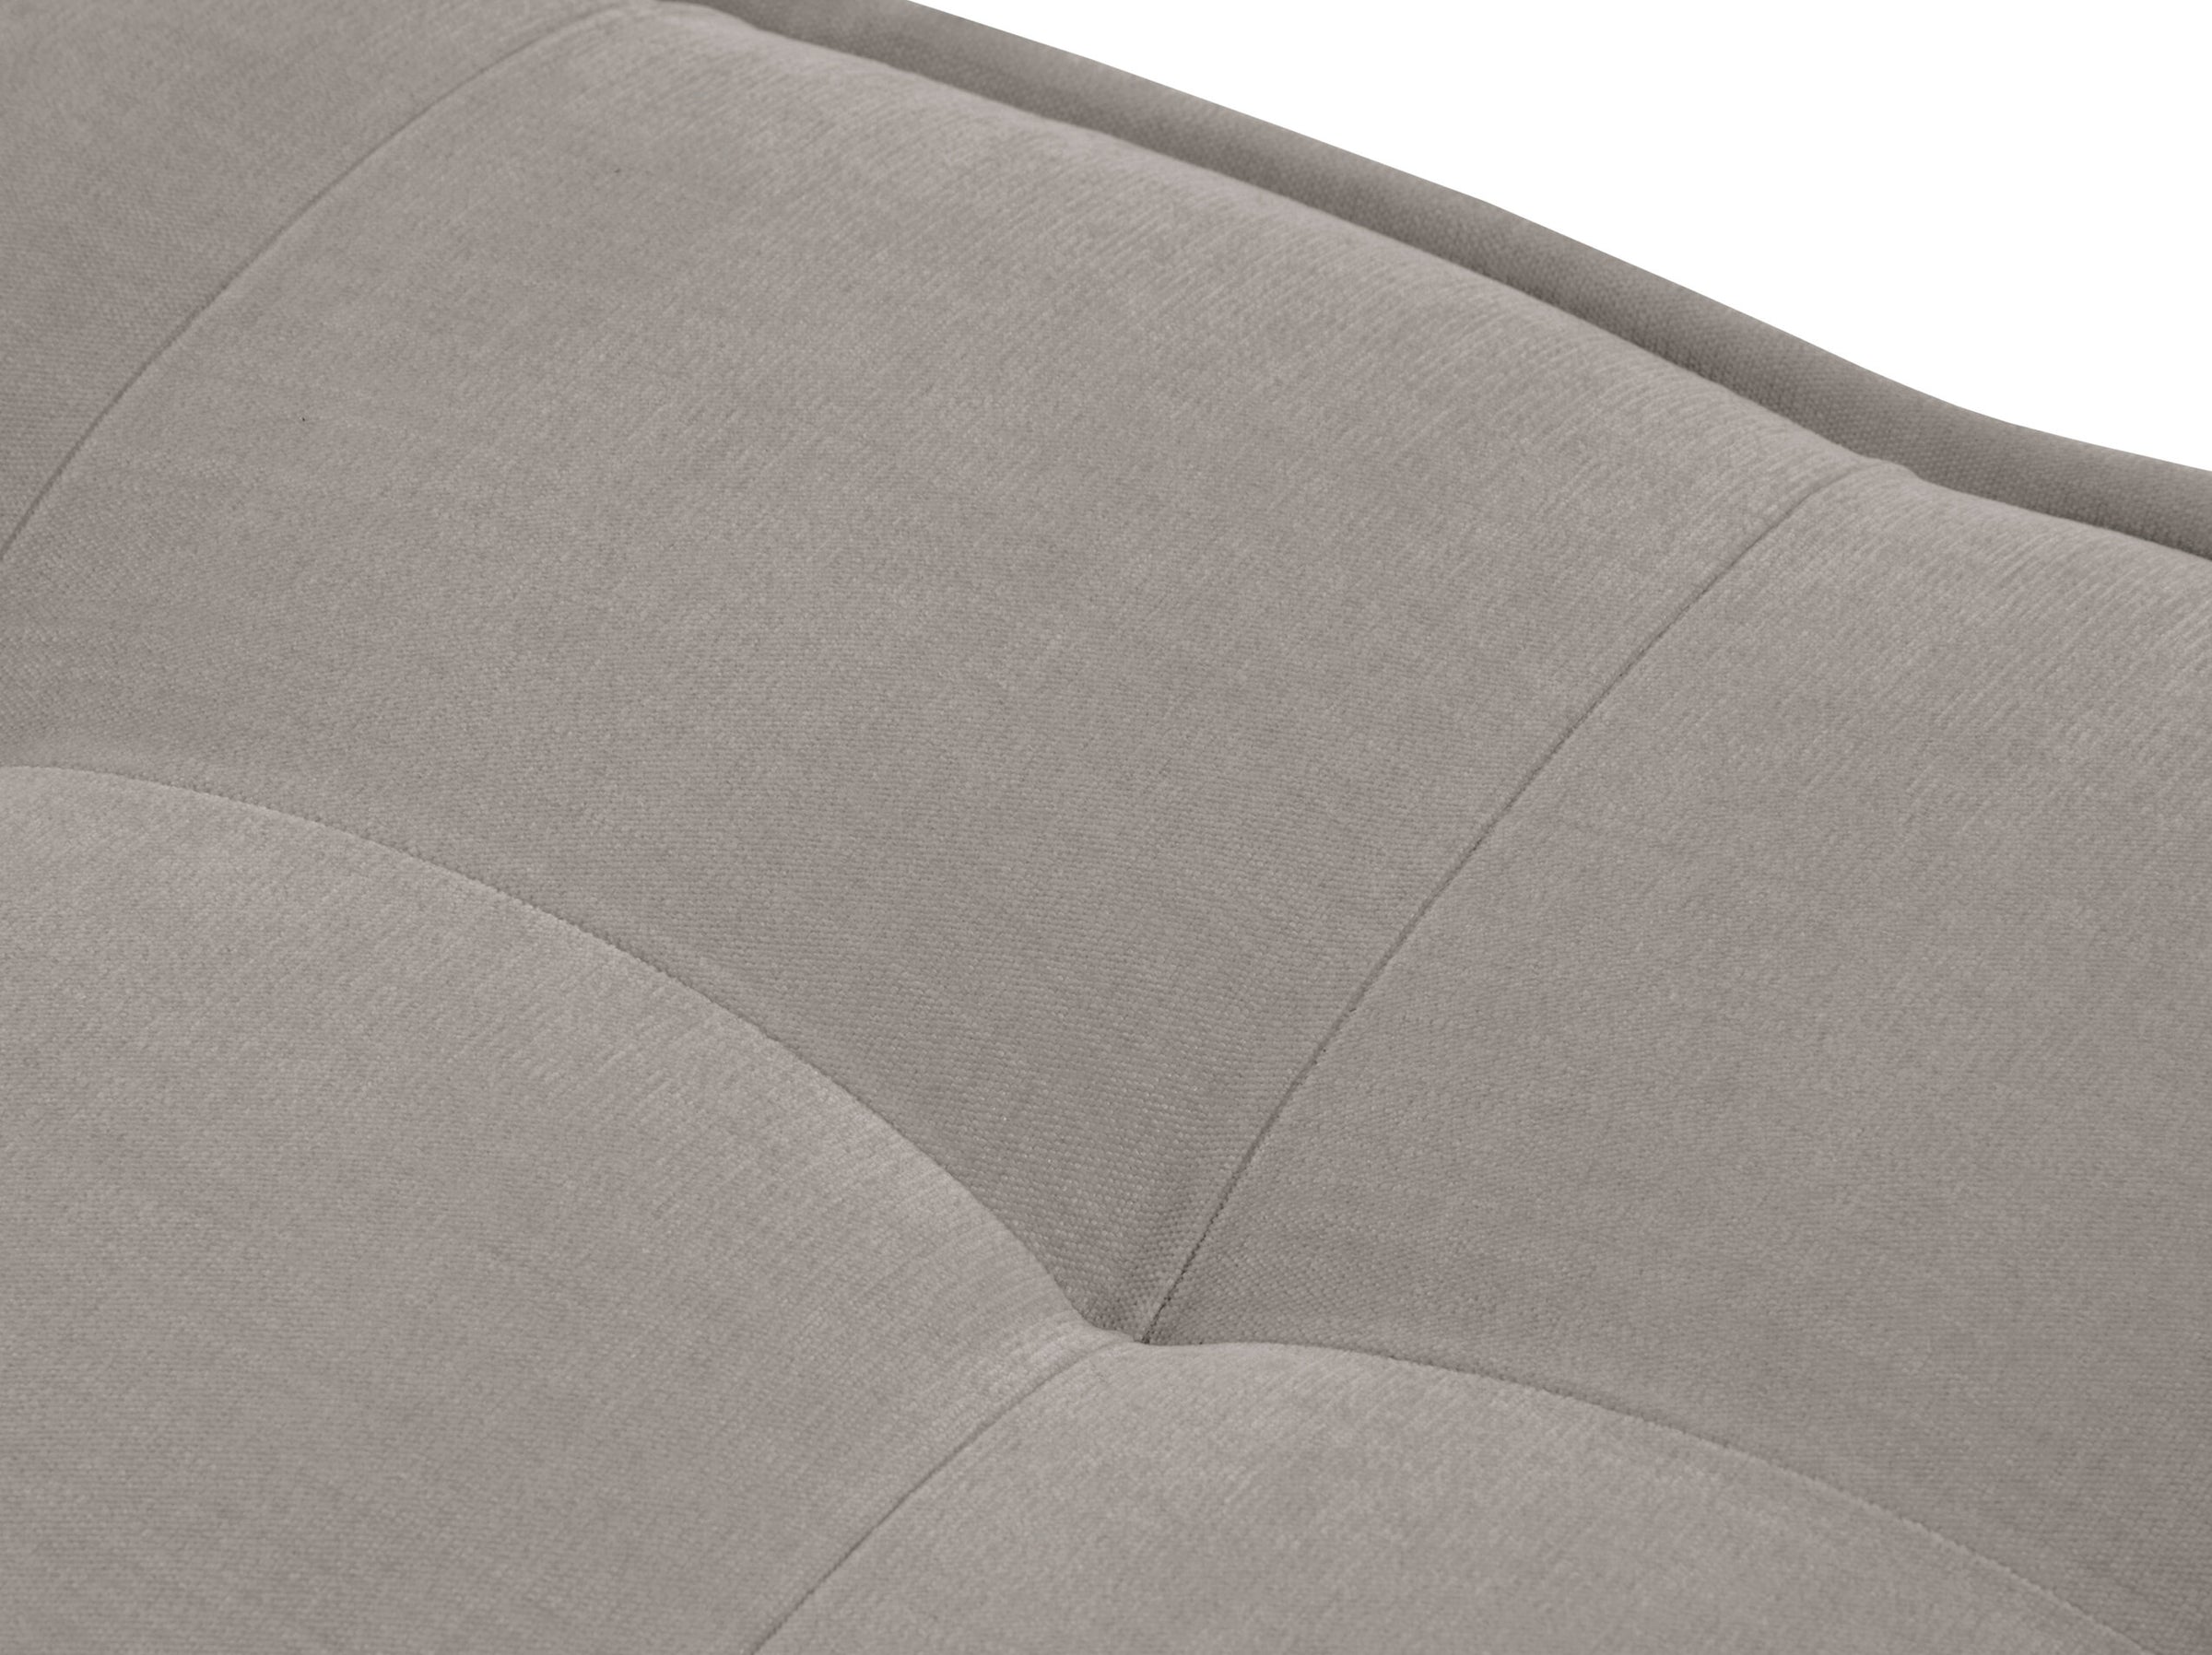 Mike sofás tessuto strutturato grigio chiaro